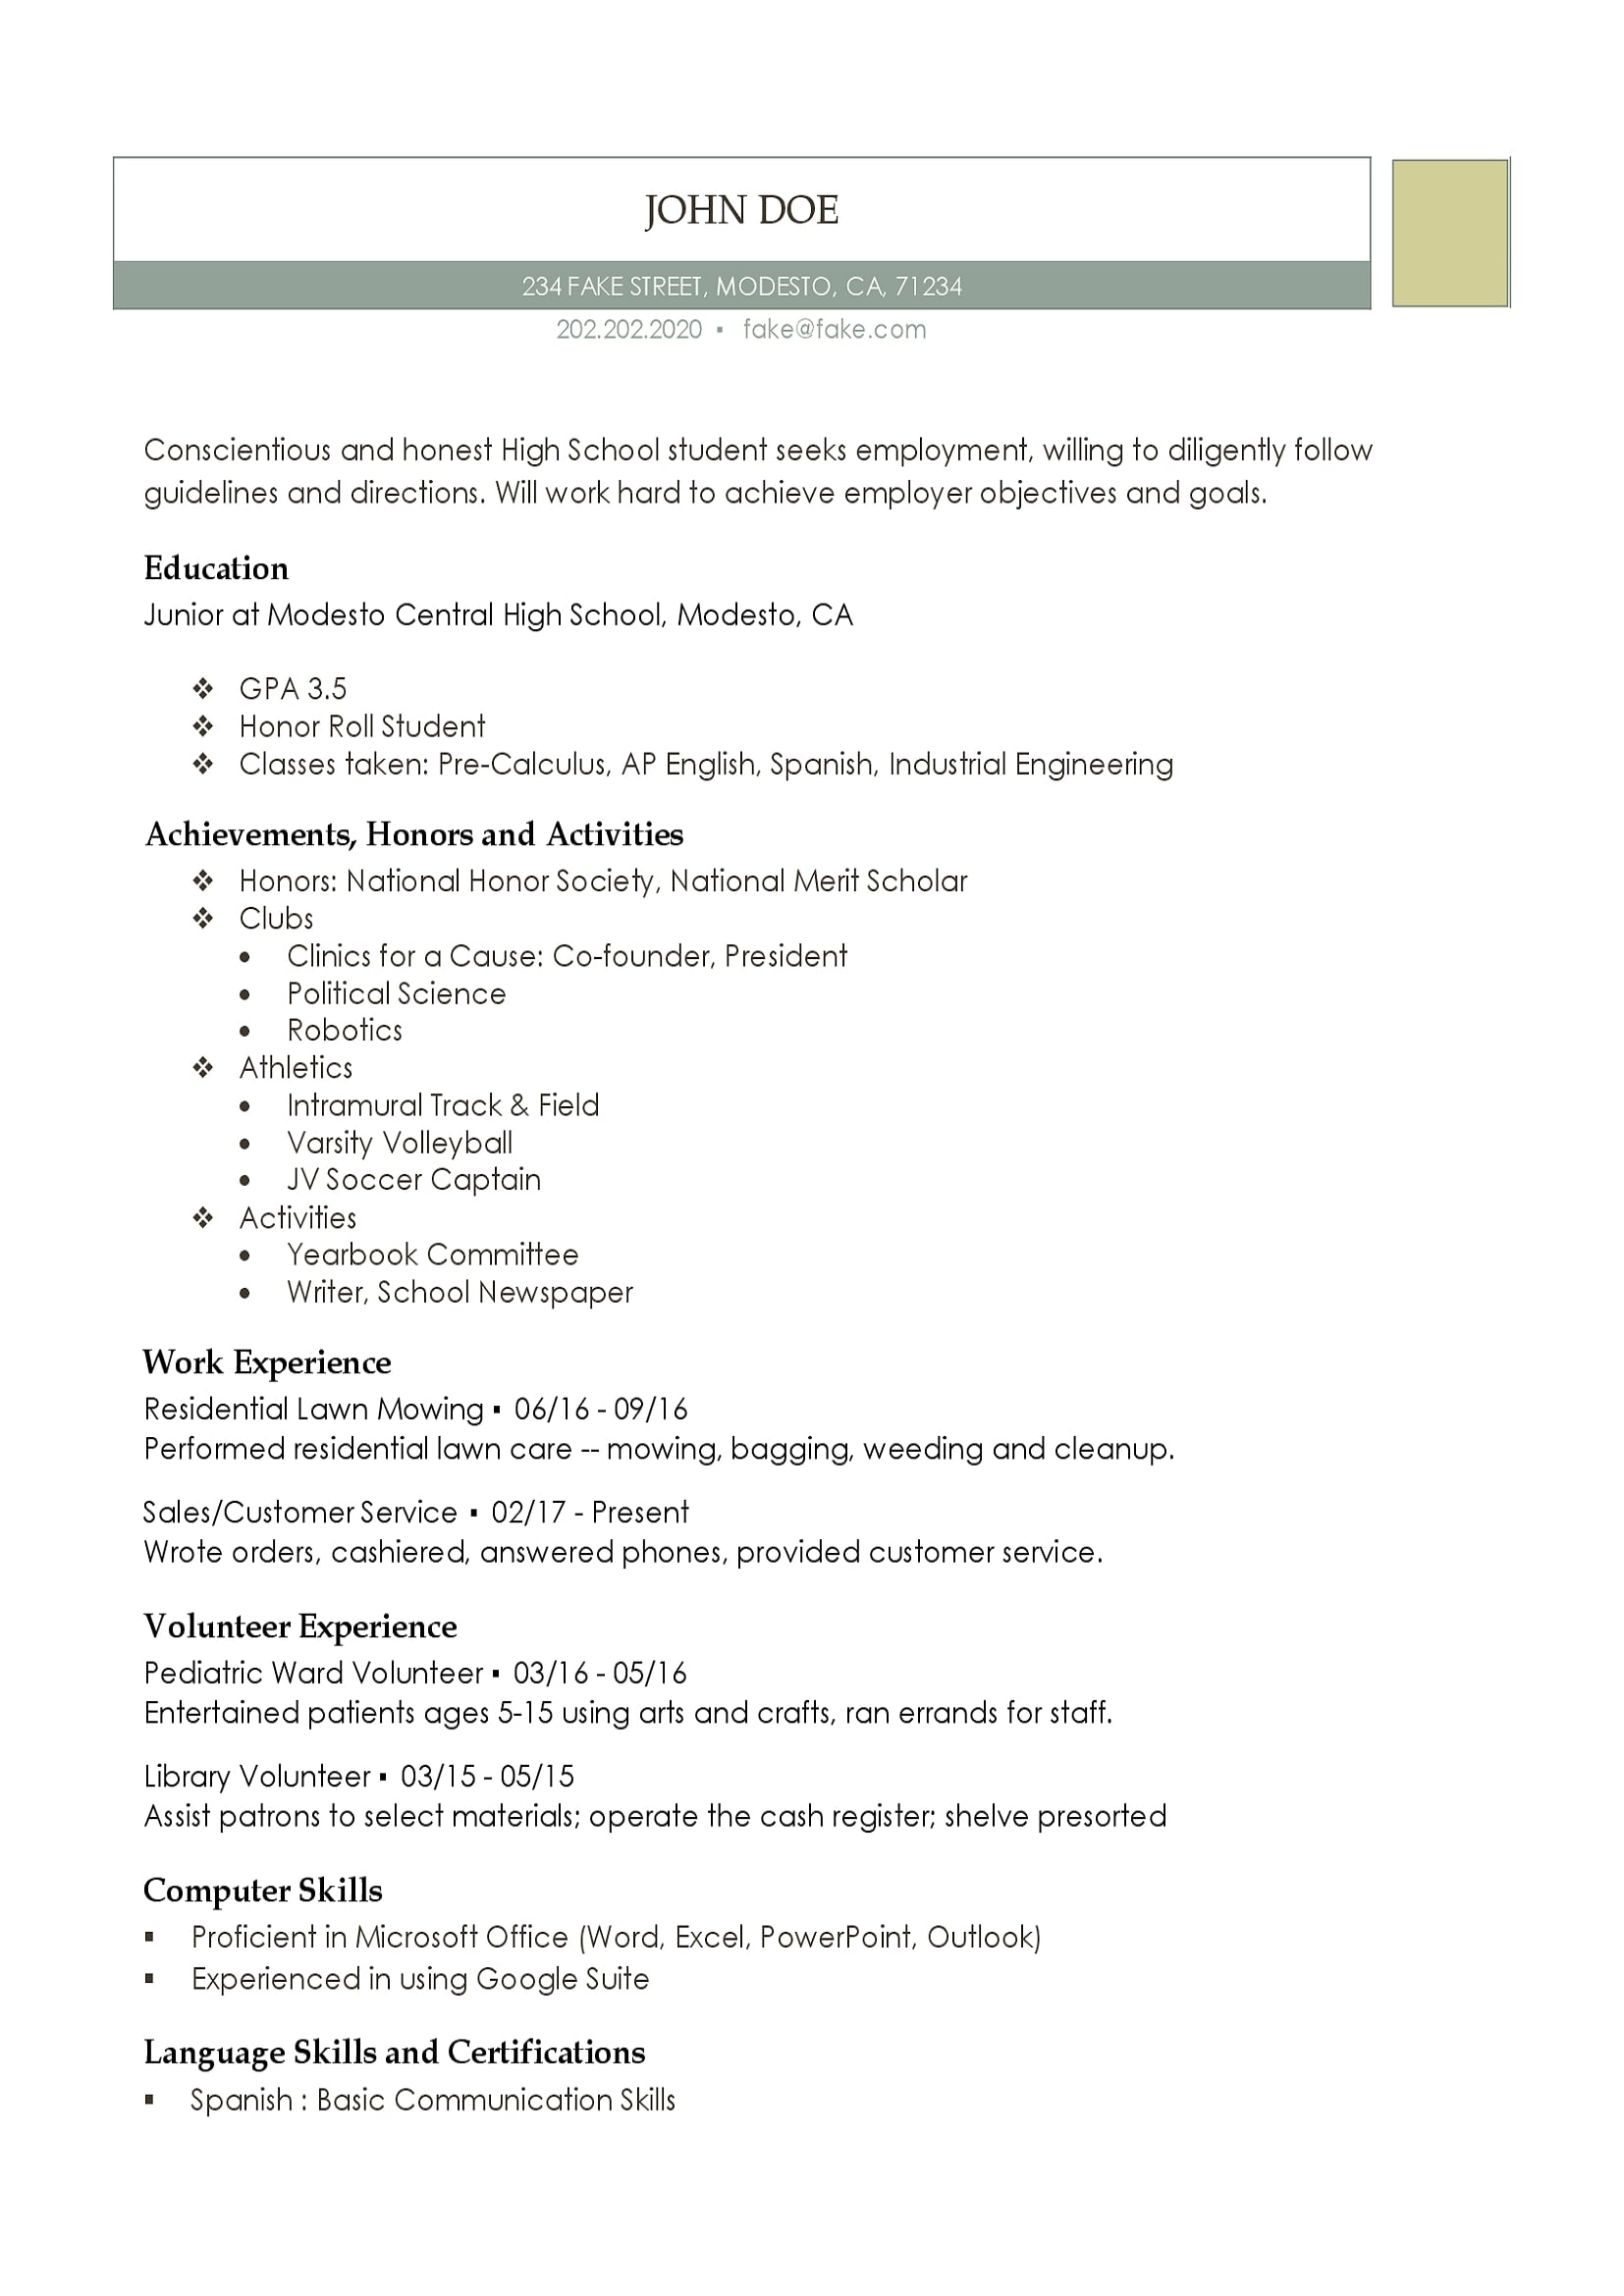 Resume For Teenager Template from cdn.hschoolresume.com